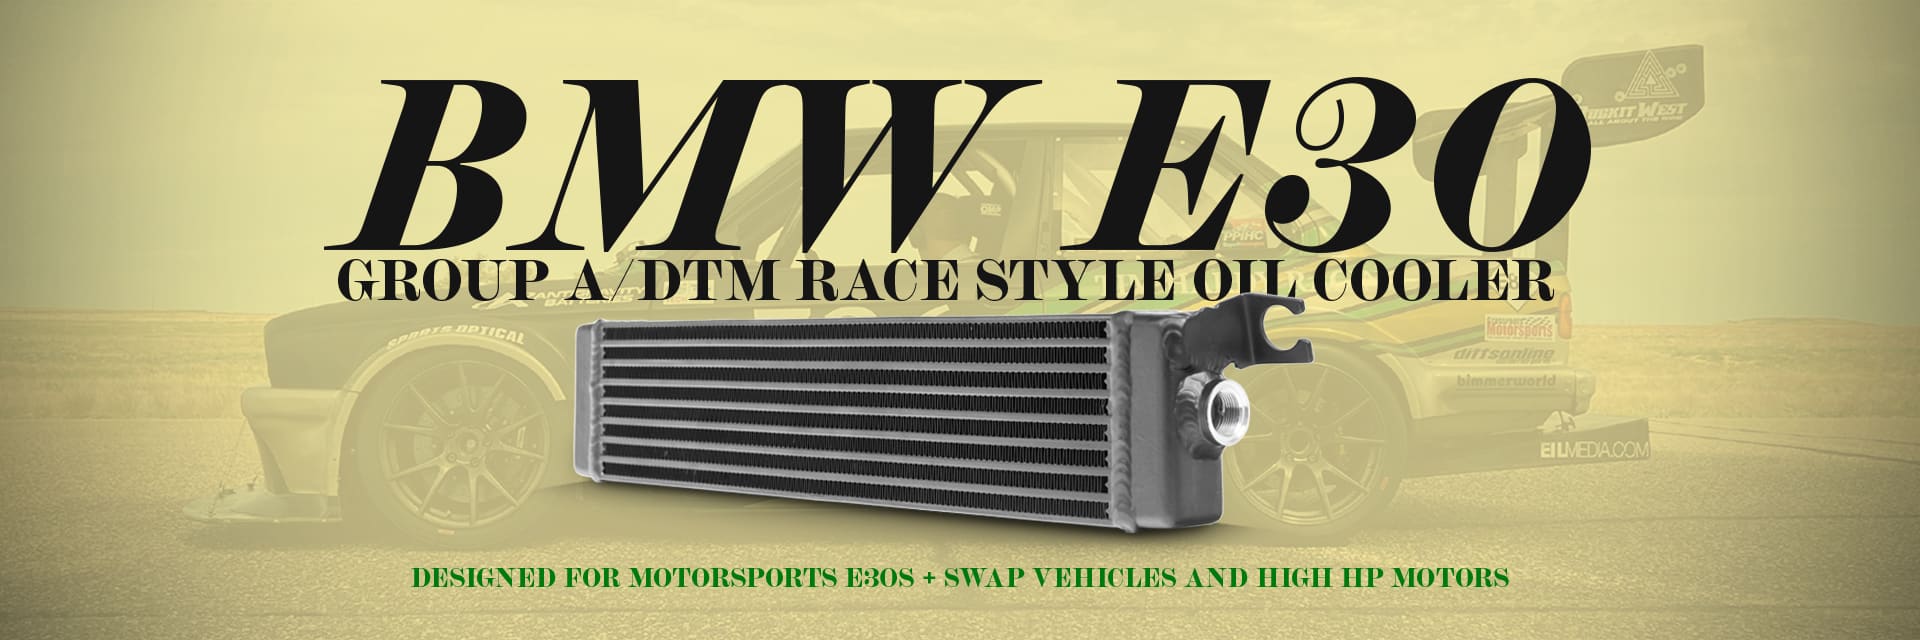 CSF Race BMW E30 Group A / DTM Race Style Oil Cooler - Blog Header